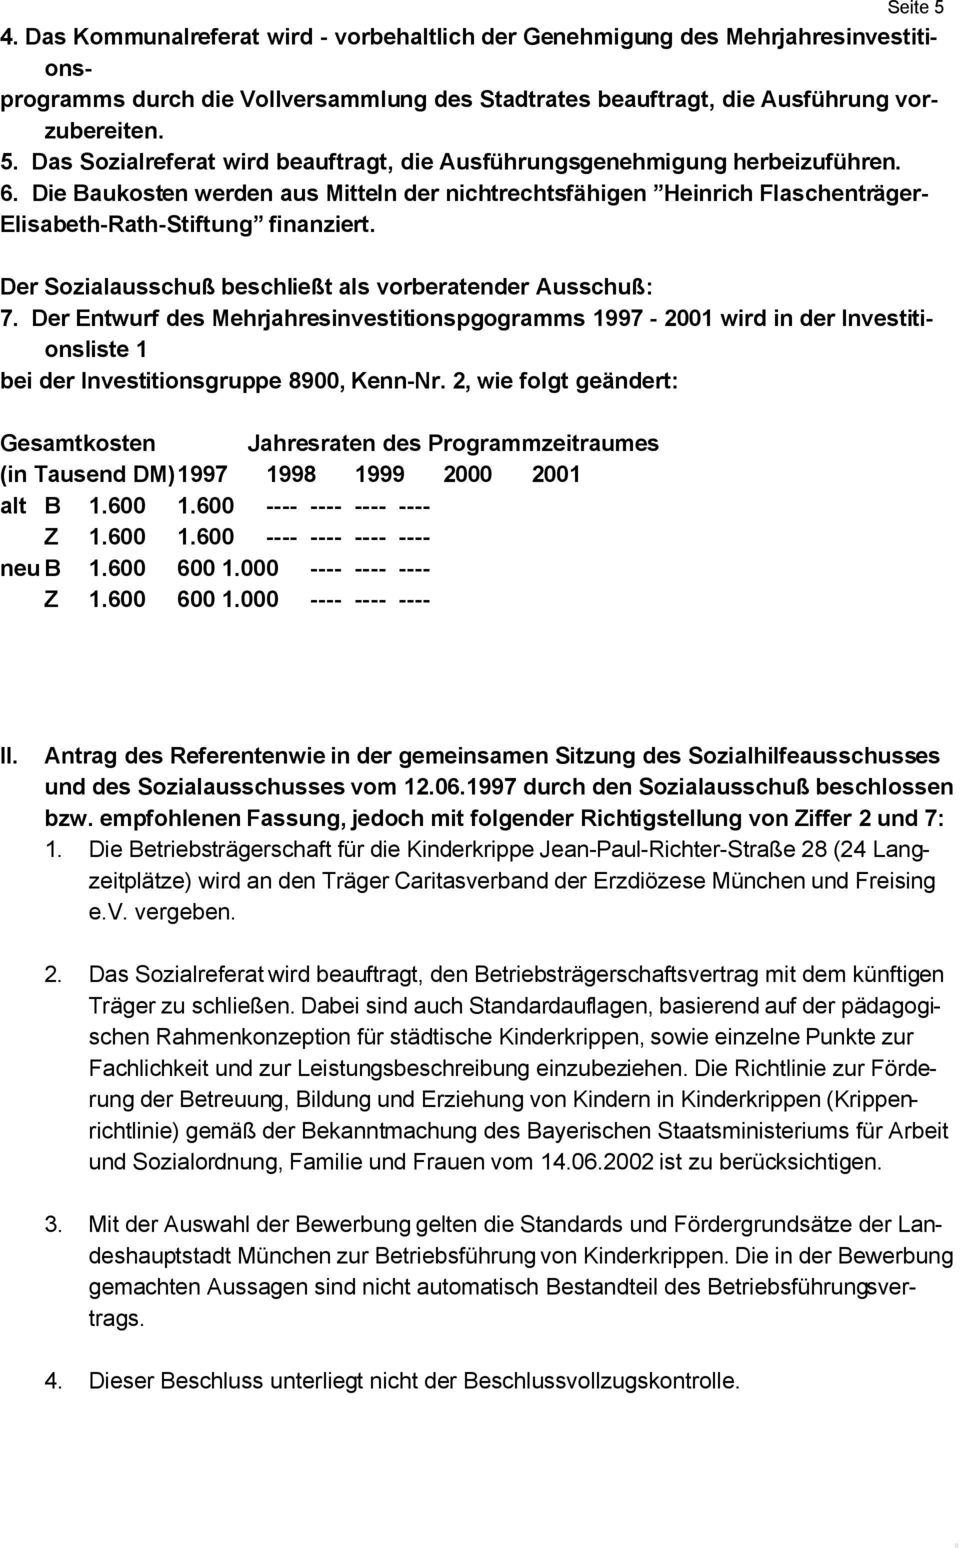 Der Entwurf des Mehrjahresinvestitionspgogramms 1997-2001 wird in der Investitionsliste 1 bei der Investitionsgruppe 8900, Kenn-Nr.